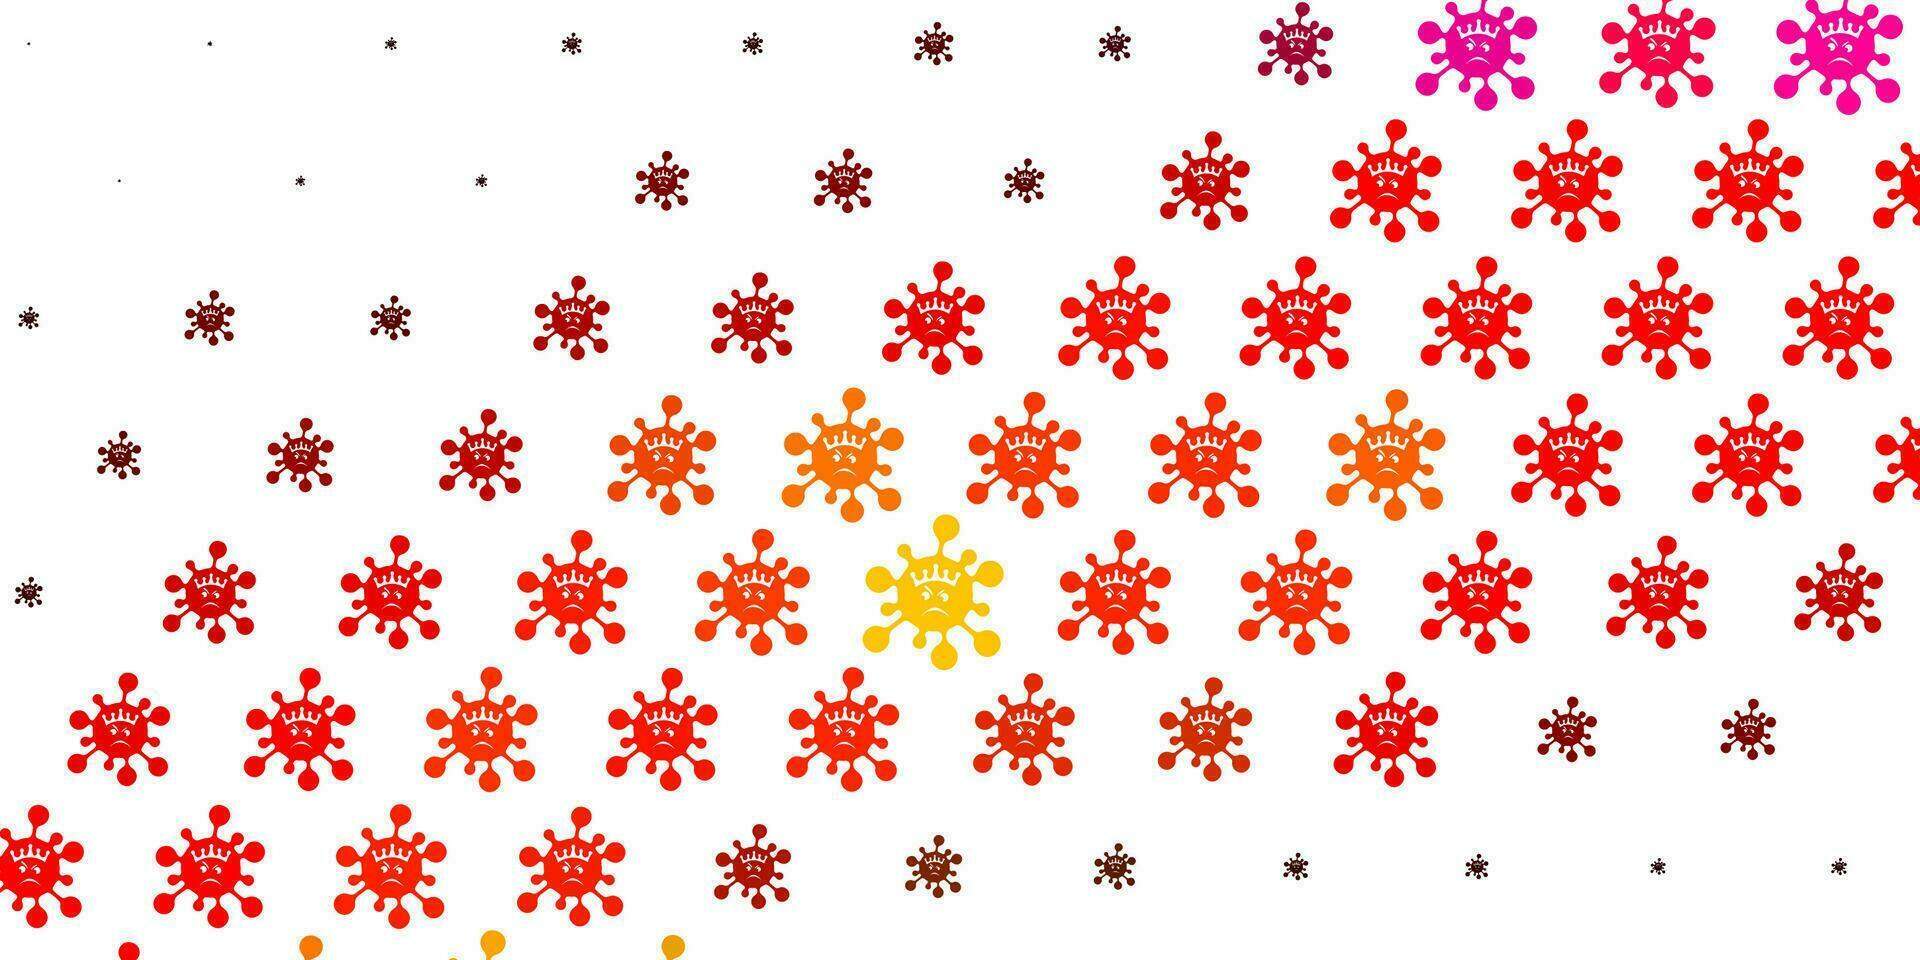 Telón de fondo de vector rojo claro con símbolos de virus.